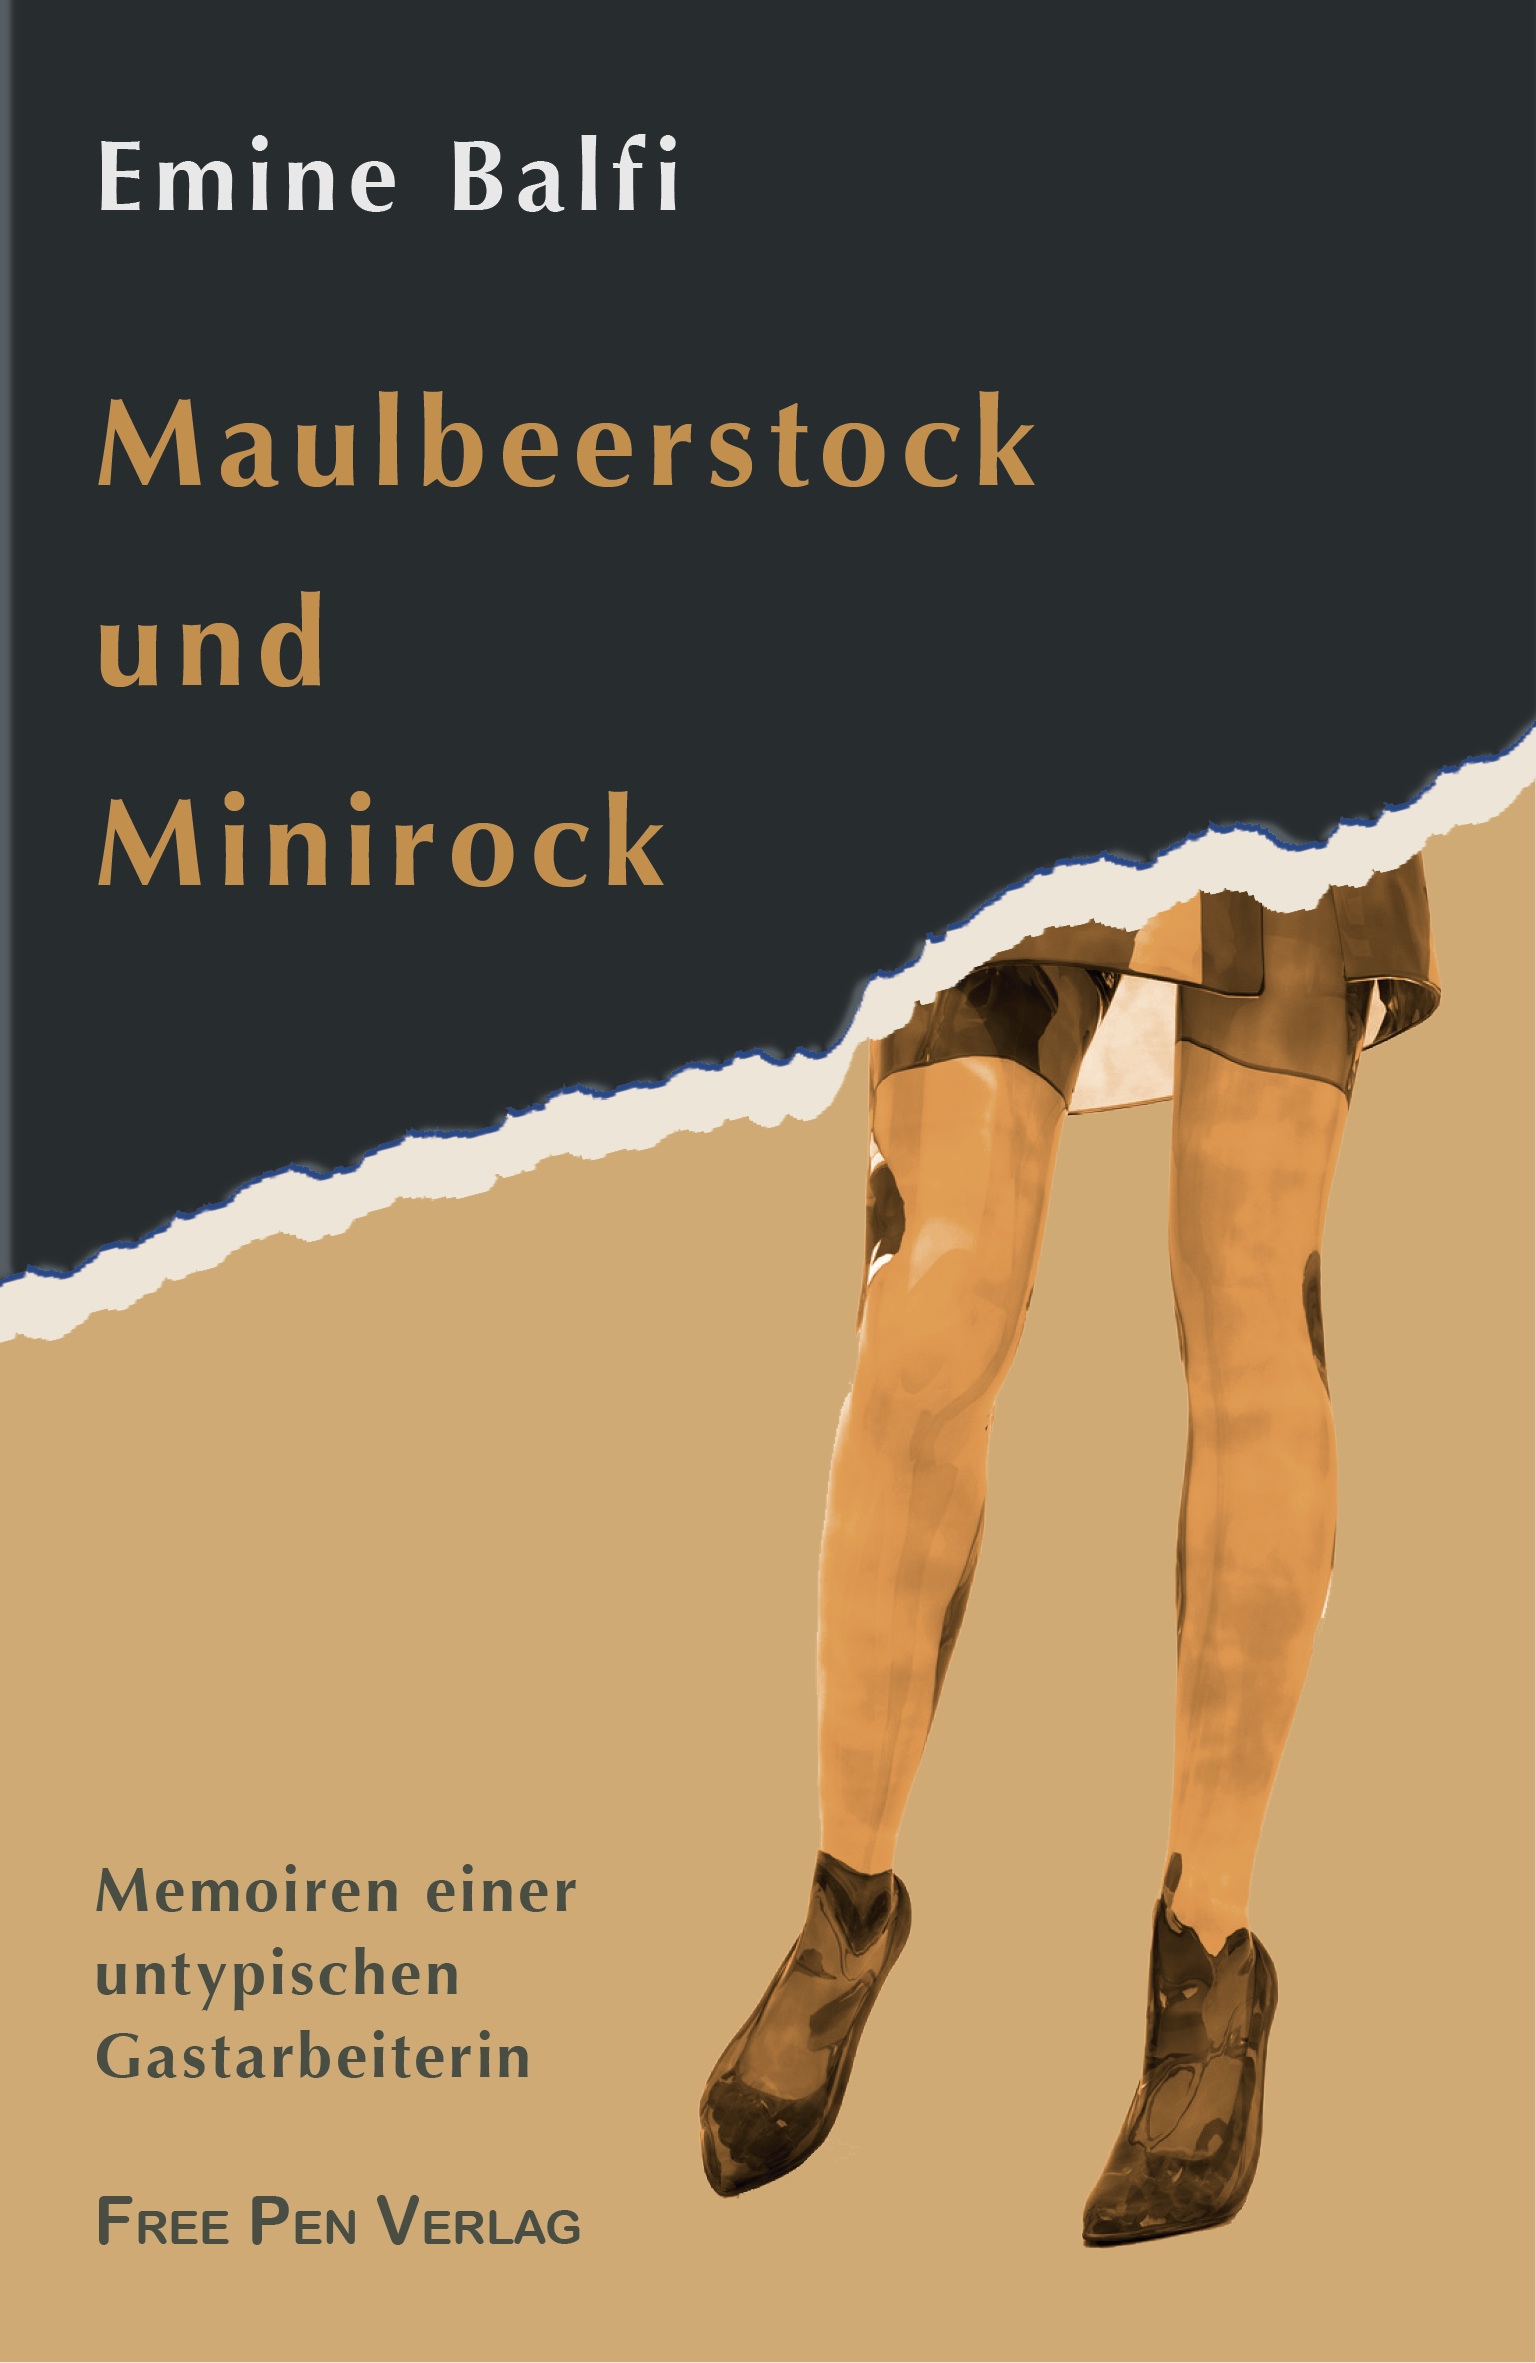 Buchcover Emine Balfi "Maulbeerstock und Minirock"; Foto: Free Pen Verlag